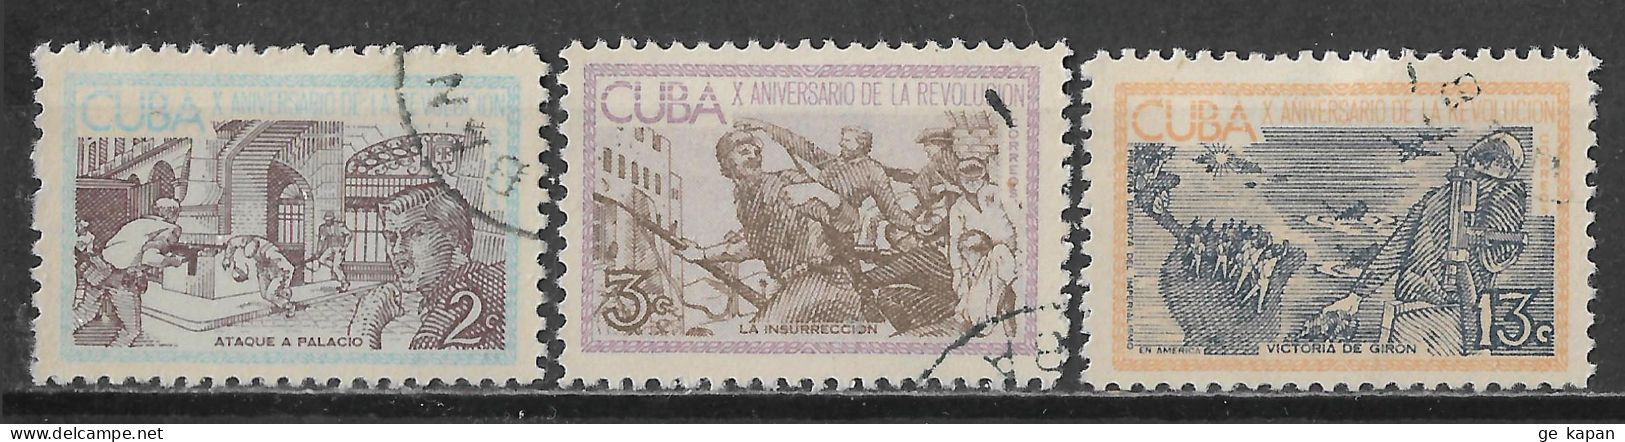 1963 CUBA SET OF 3 USED STAMPS (Michel # 853,854,858) CV €1.70 - Usati